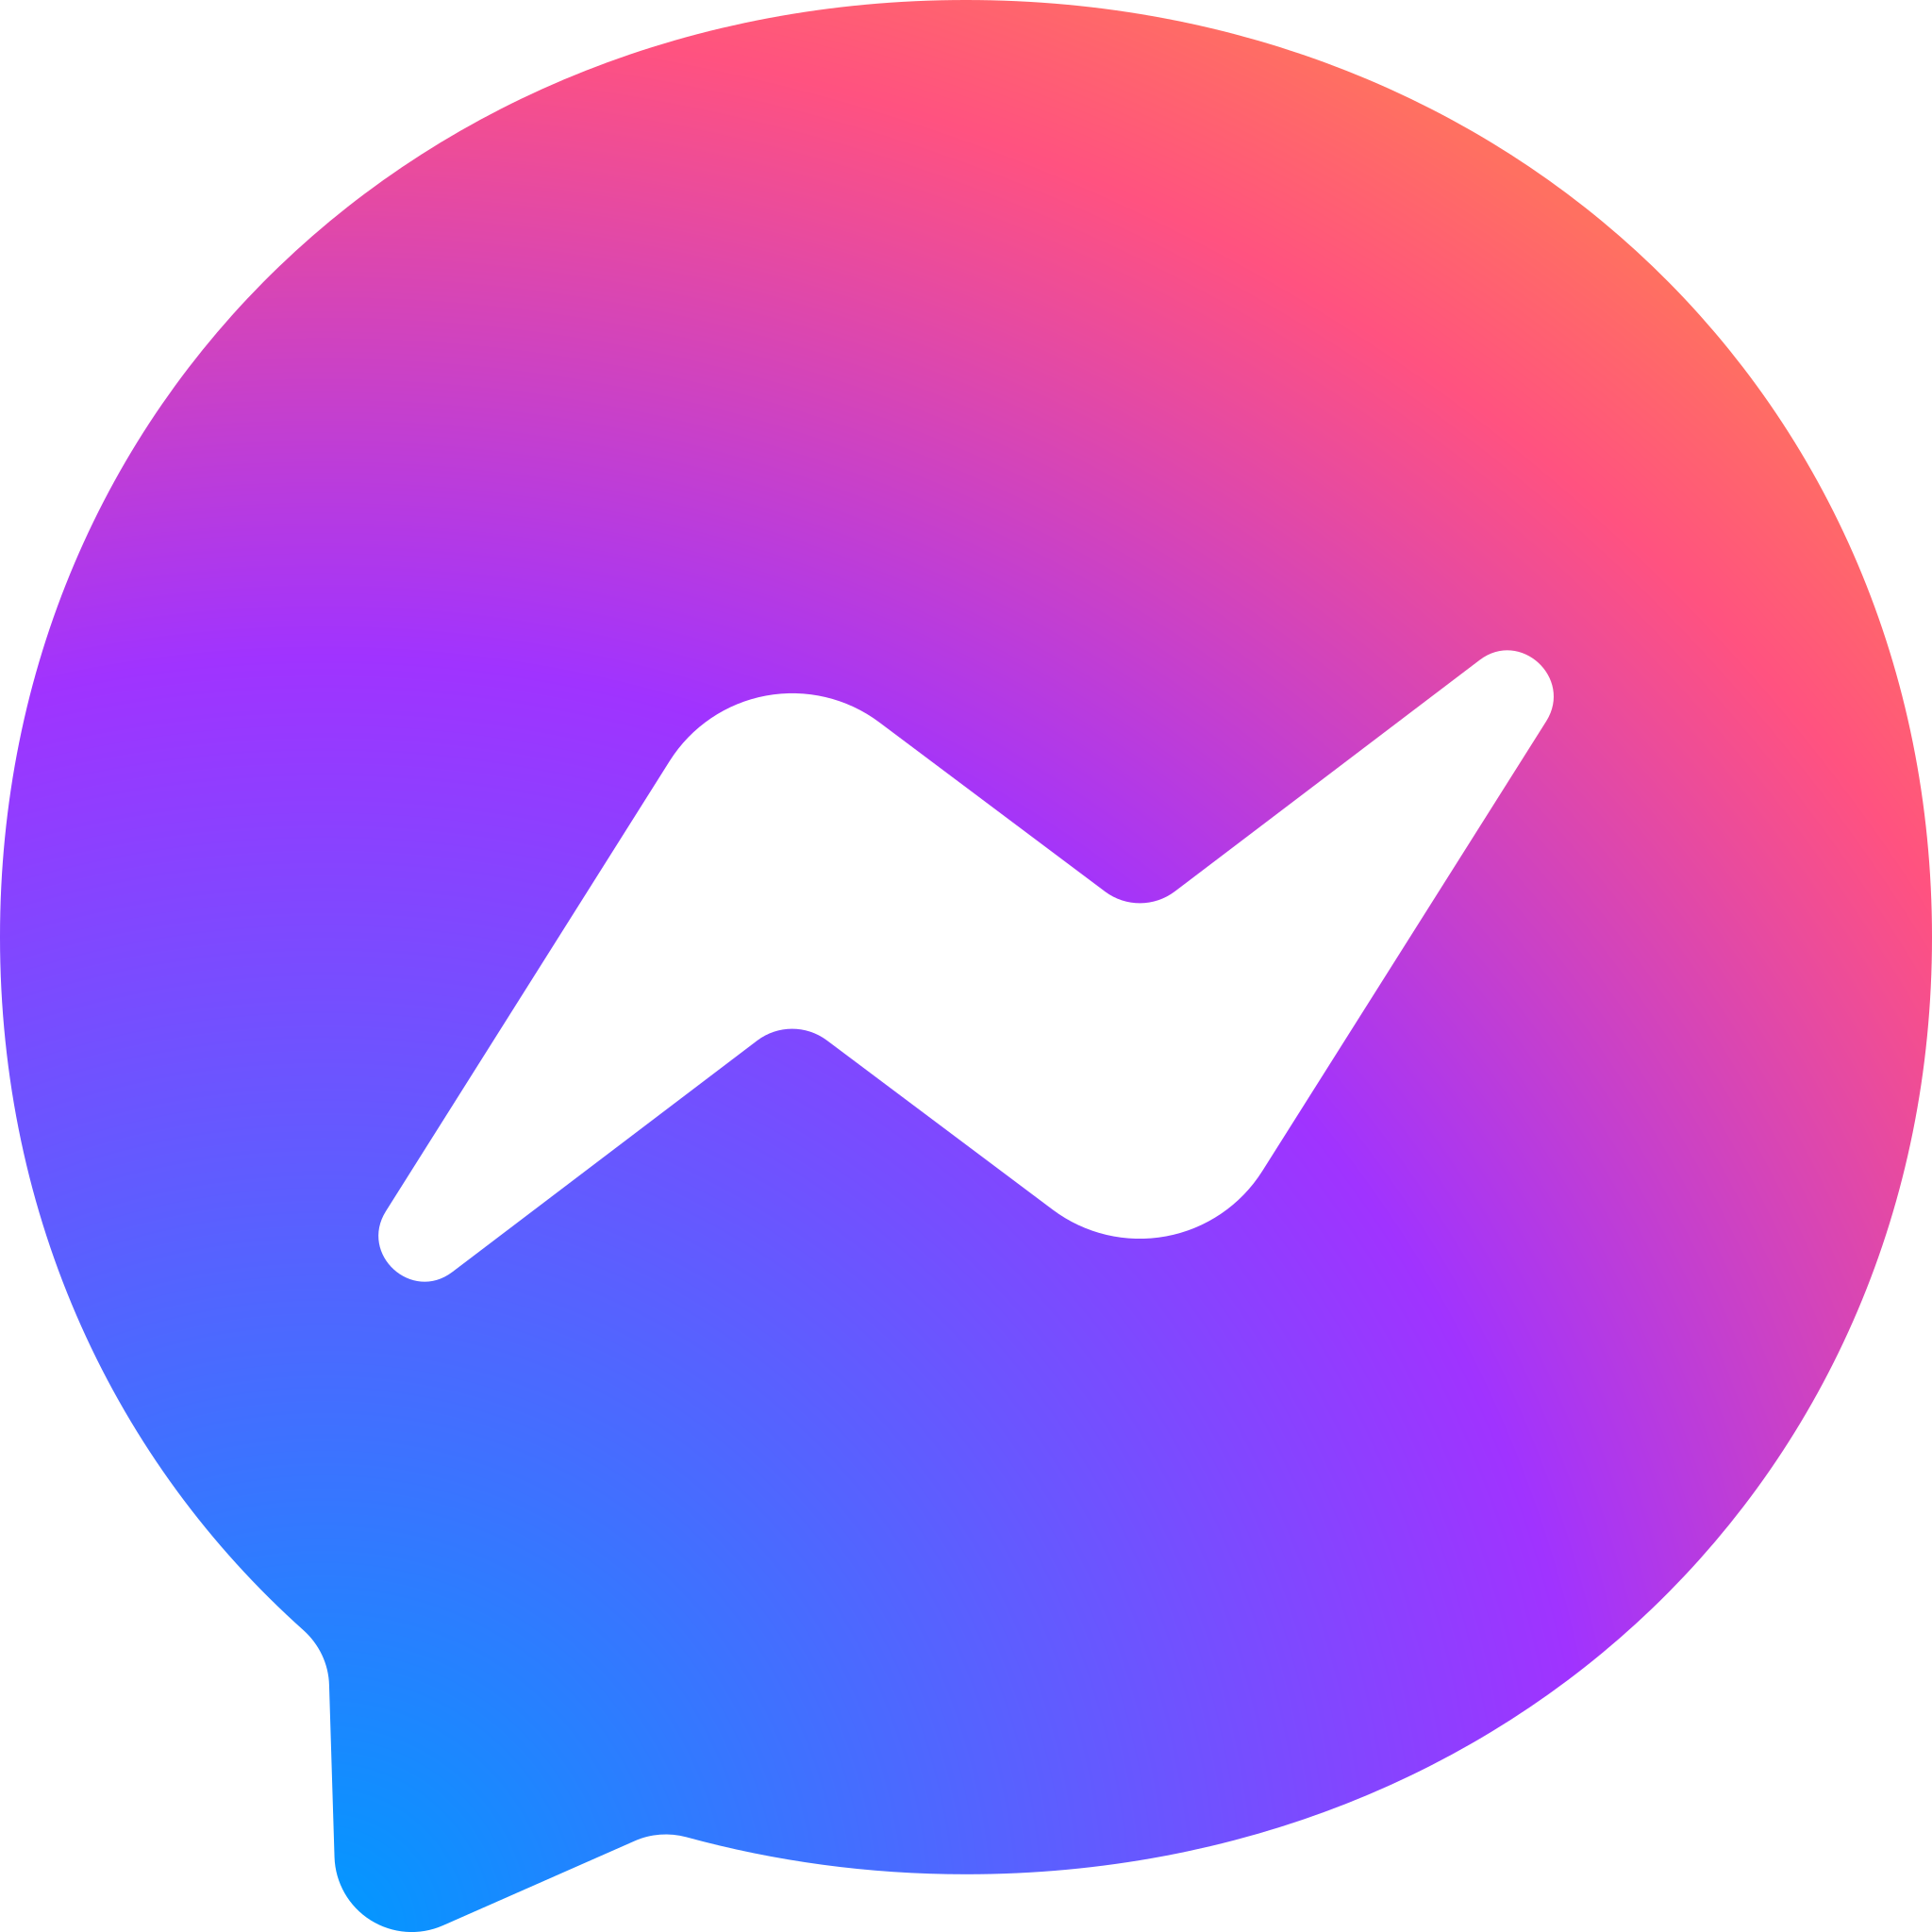 File:Facebook Messenger logo 2020.svg - Wikimedia Commons